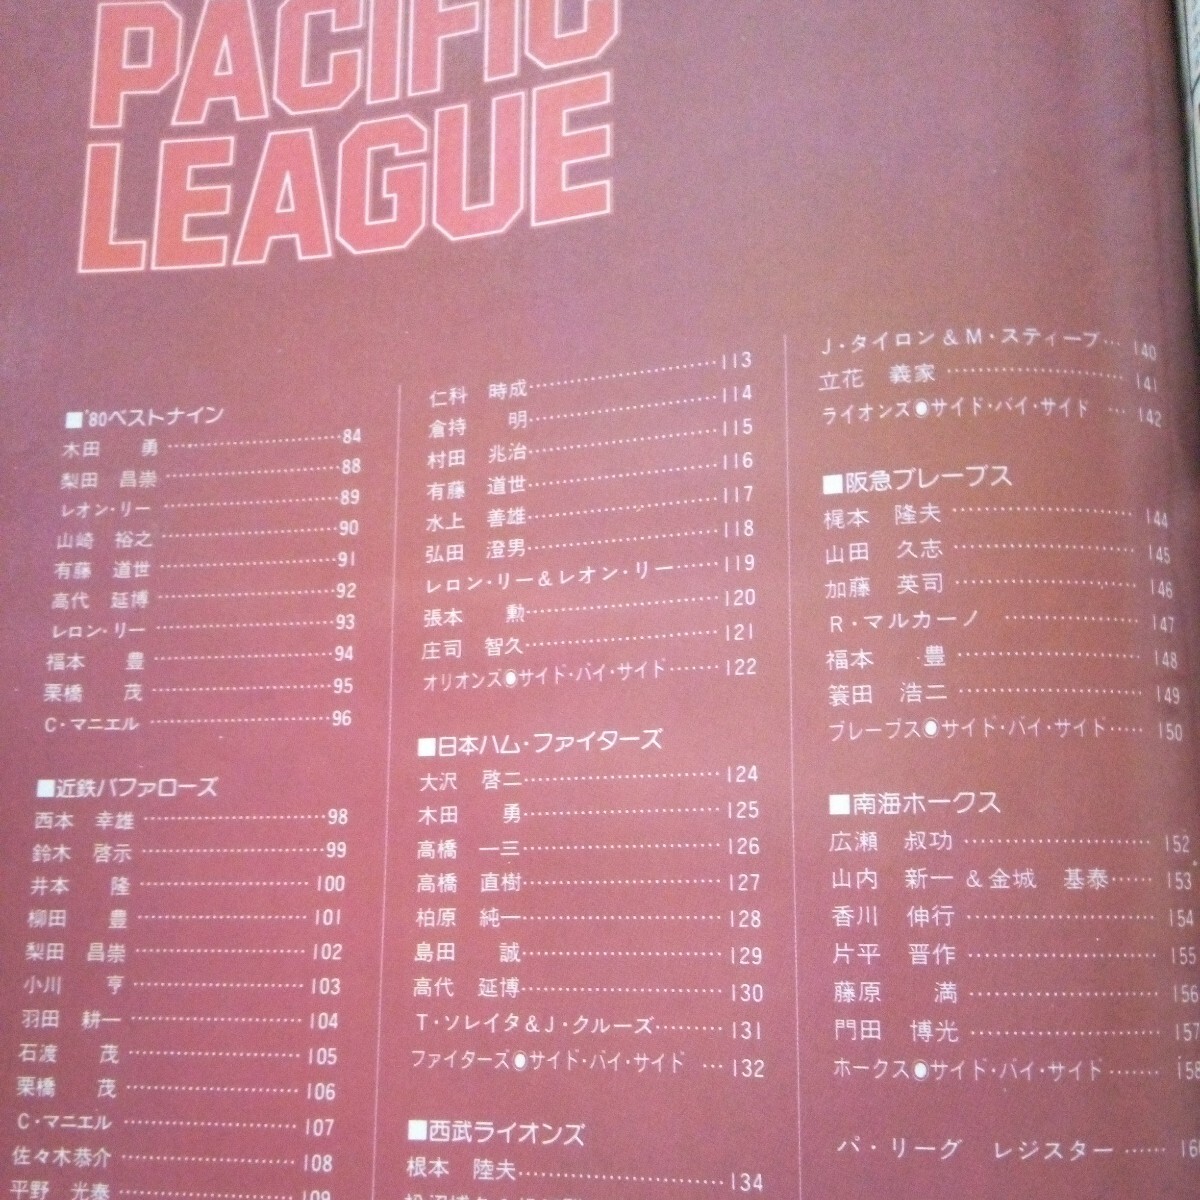 1980 year Professional Baseball player monogatari separate volume weekly Baseball New Year (Spring) number Baseball magazine company 